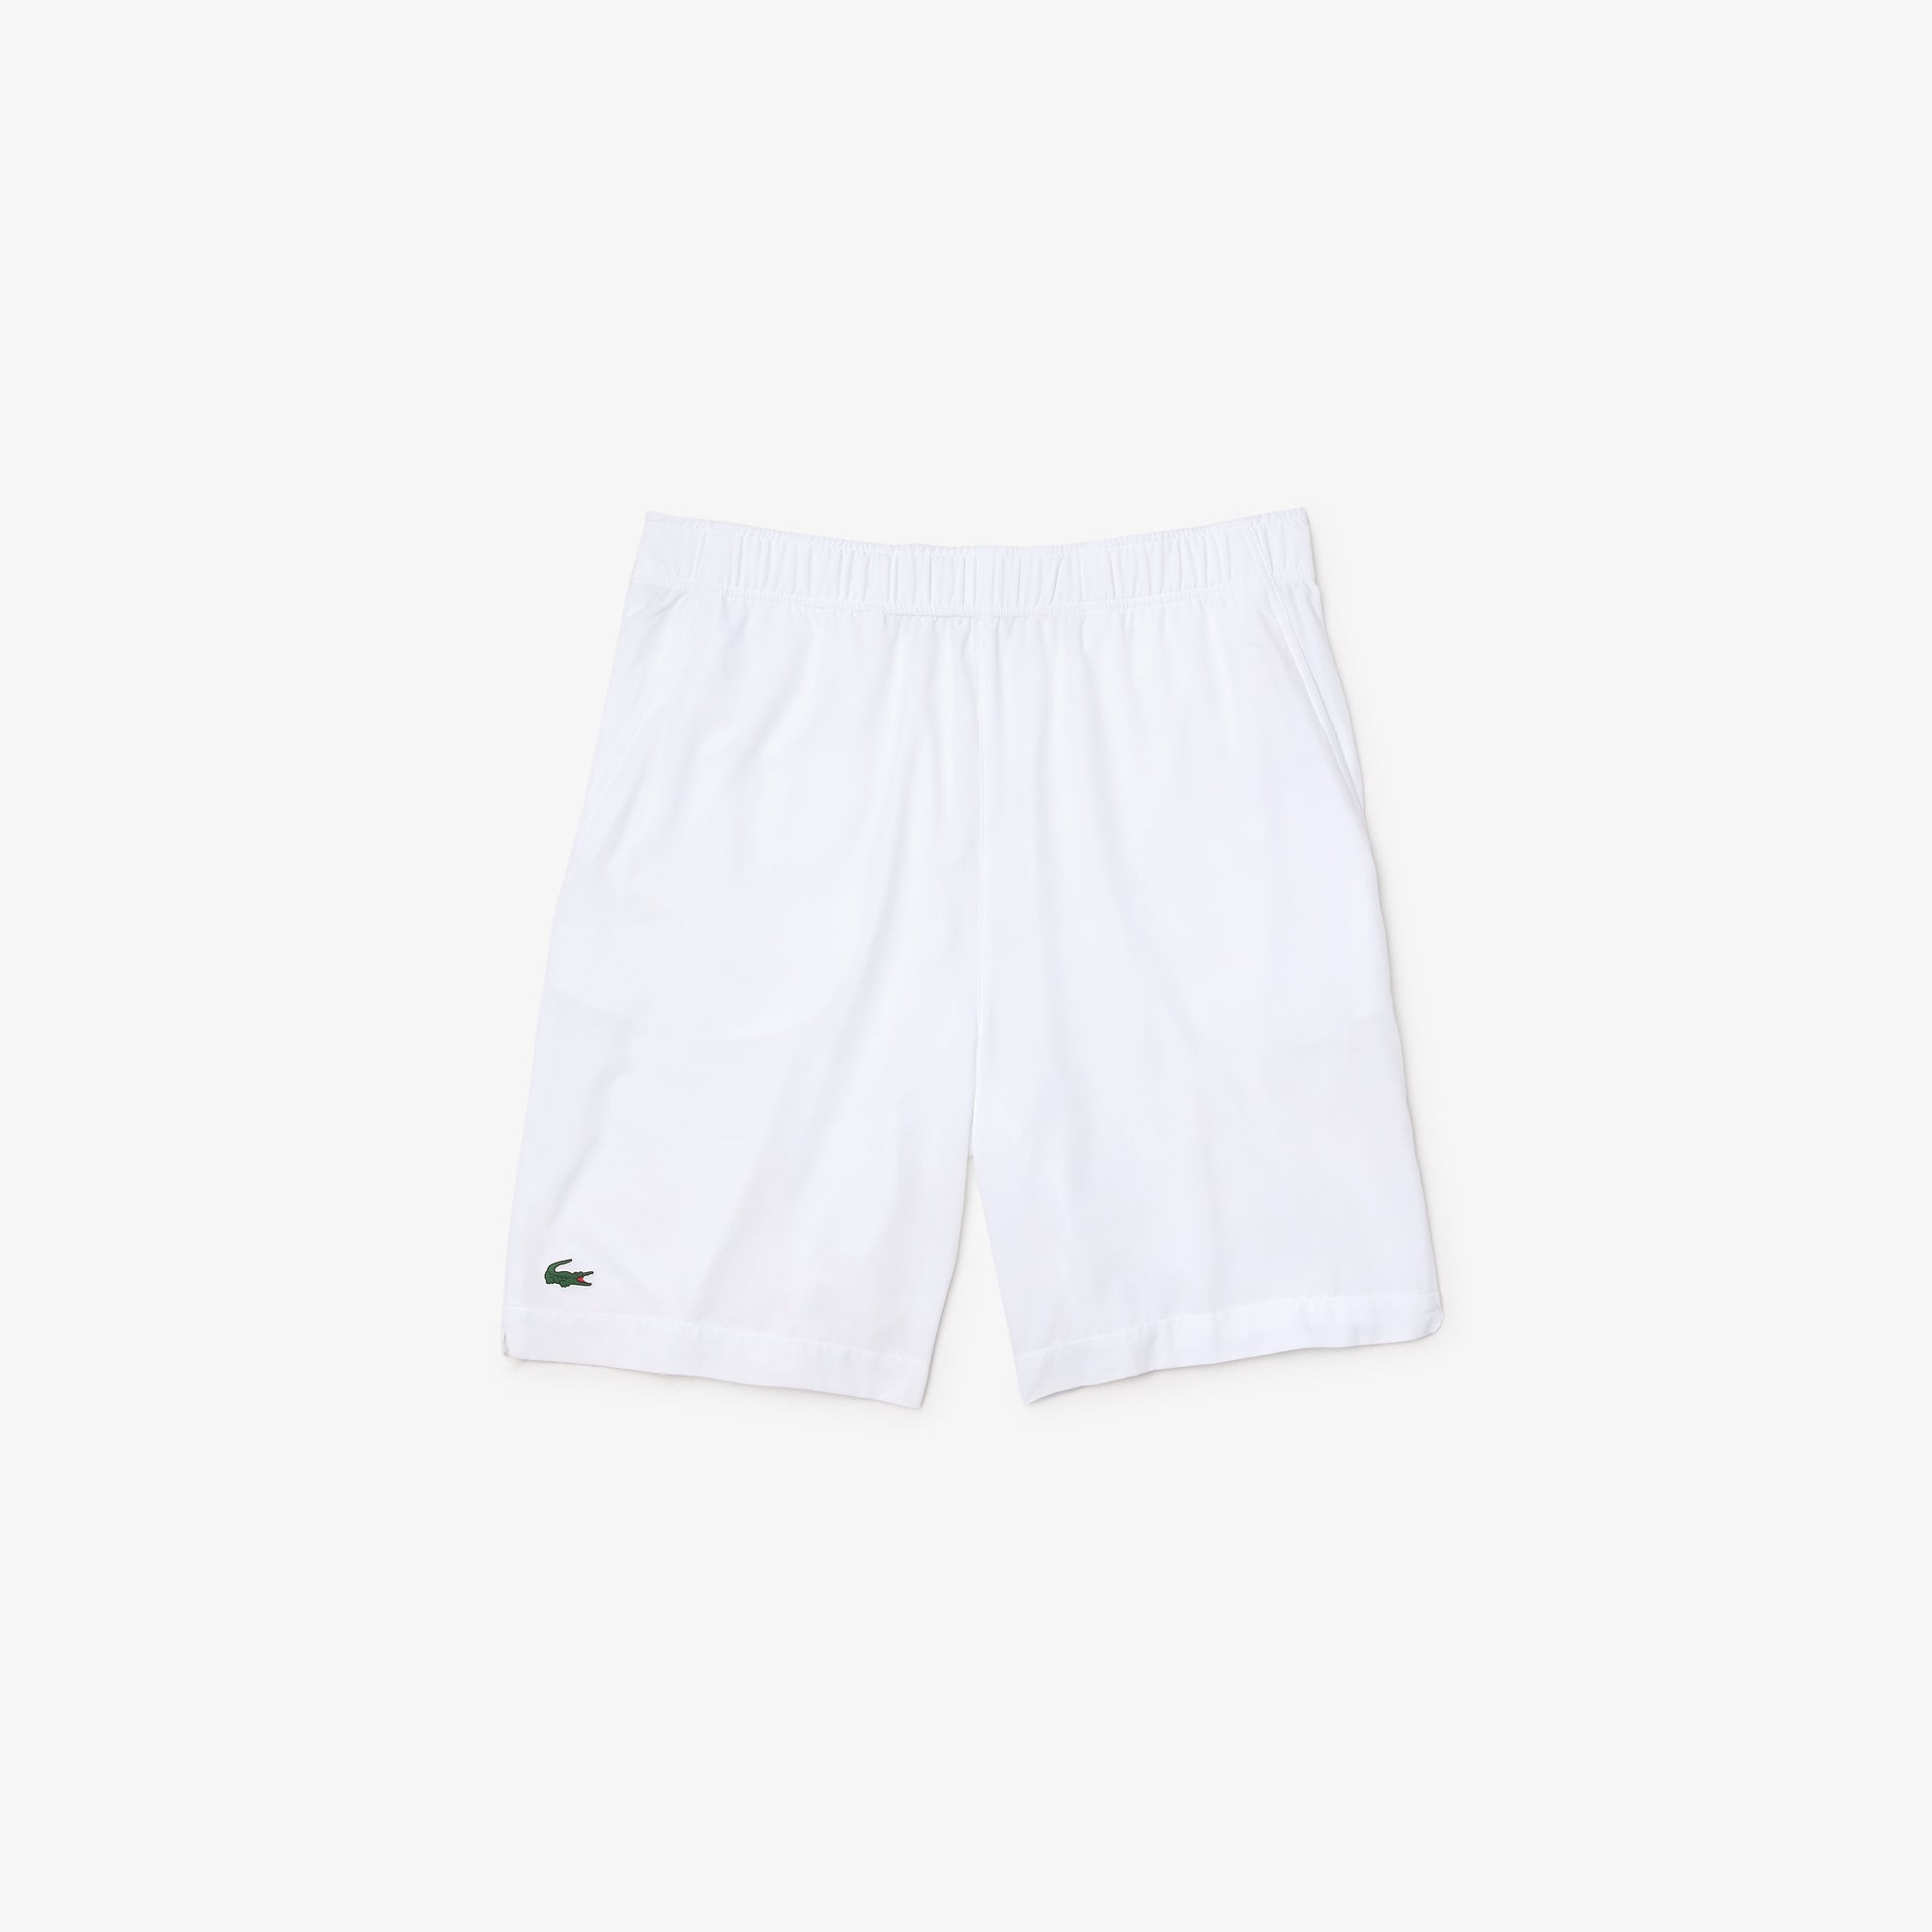 Lacoste Shorts (Blanc/Navy) - S